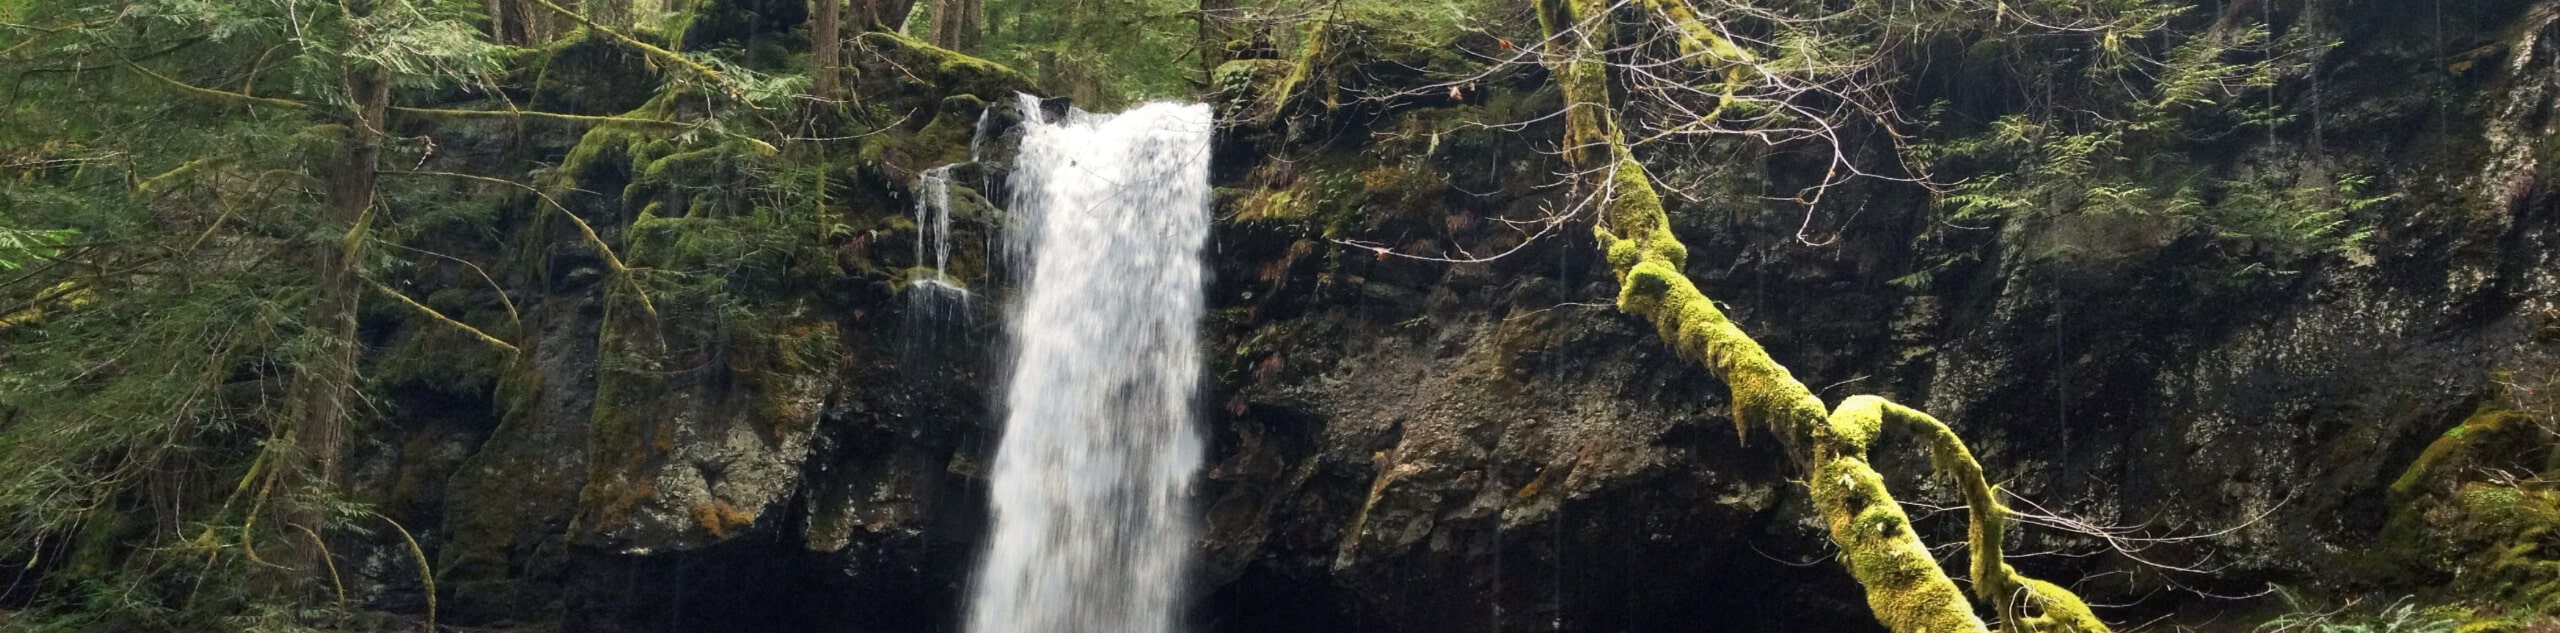 Trestle Creek Falls Upper and Lower Trail